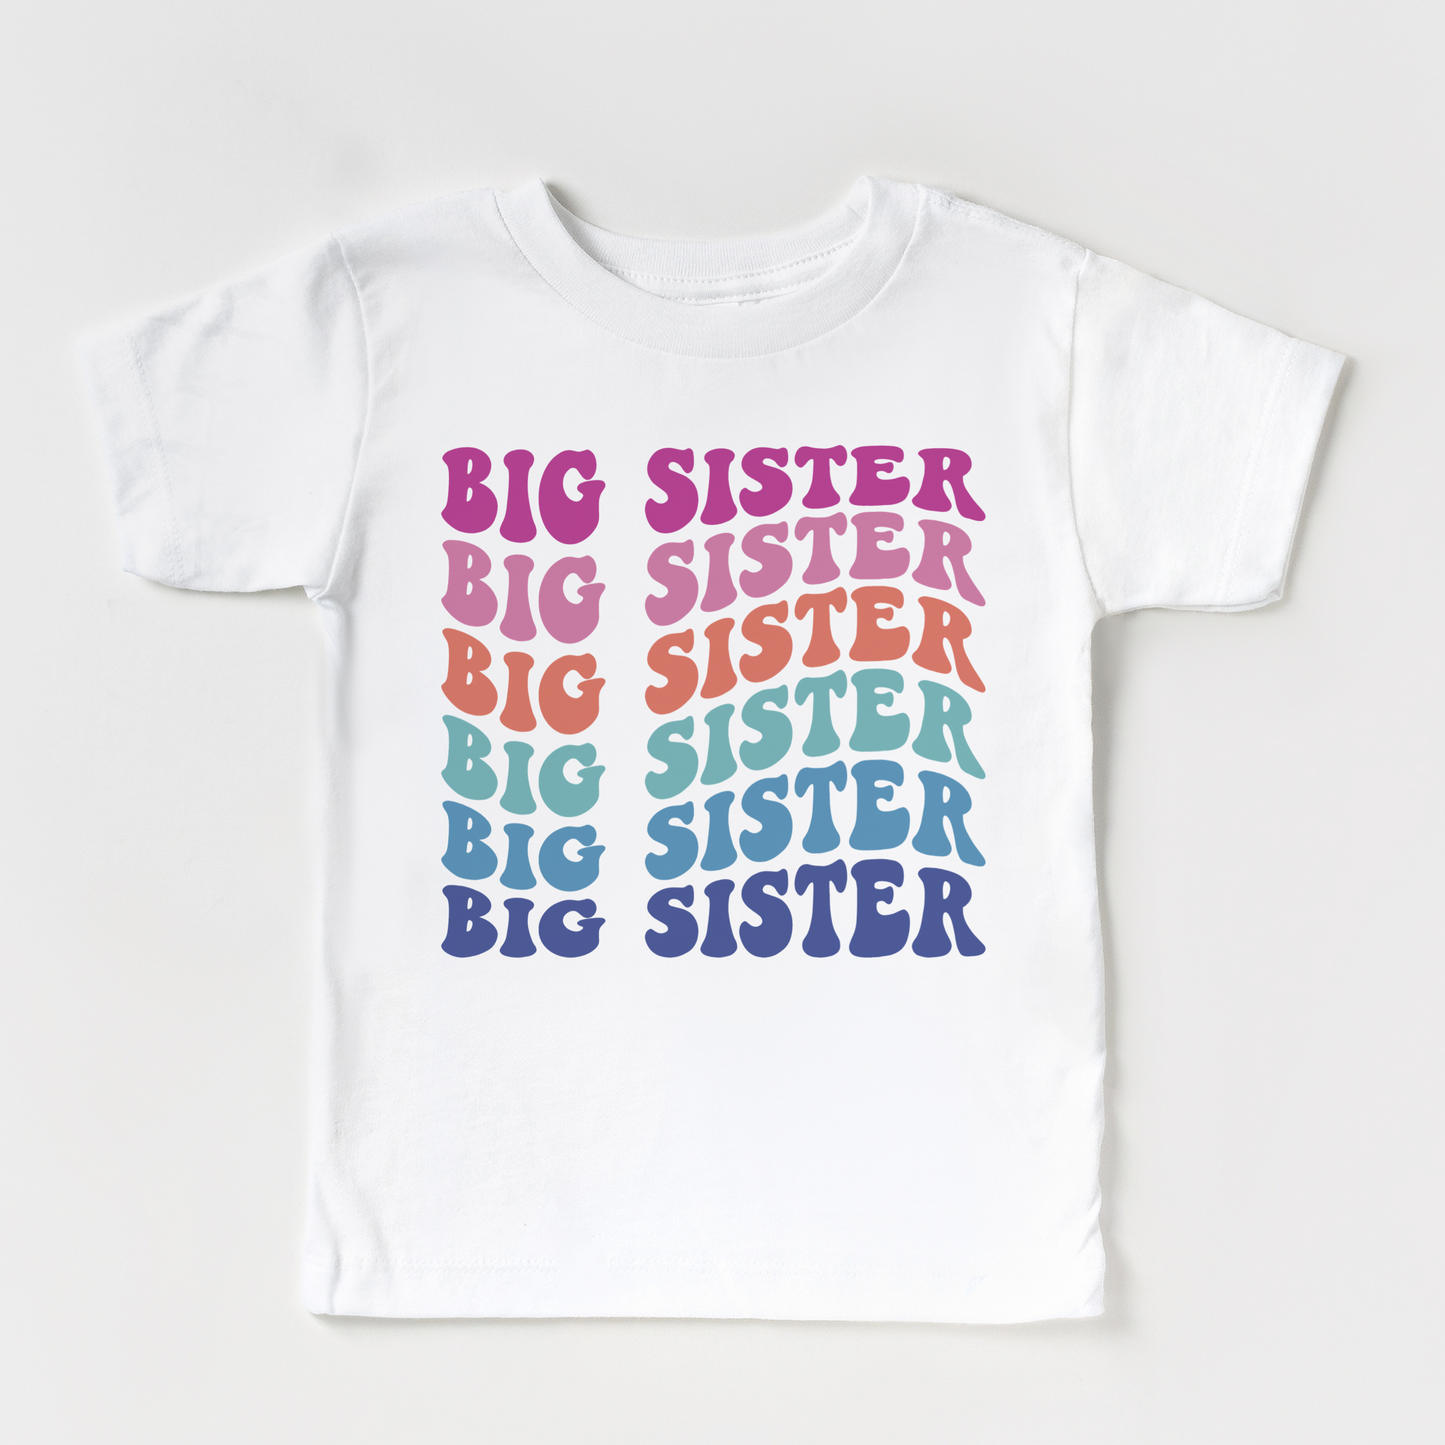 Big sister pregnancy announcement shirt